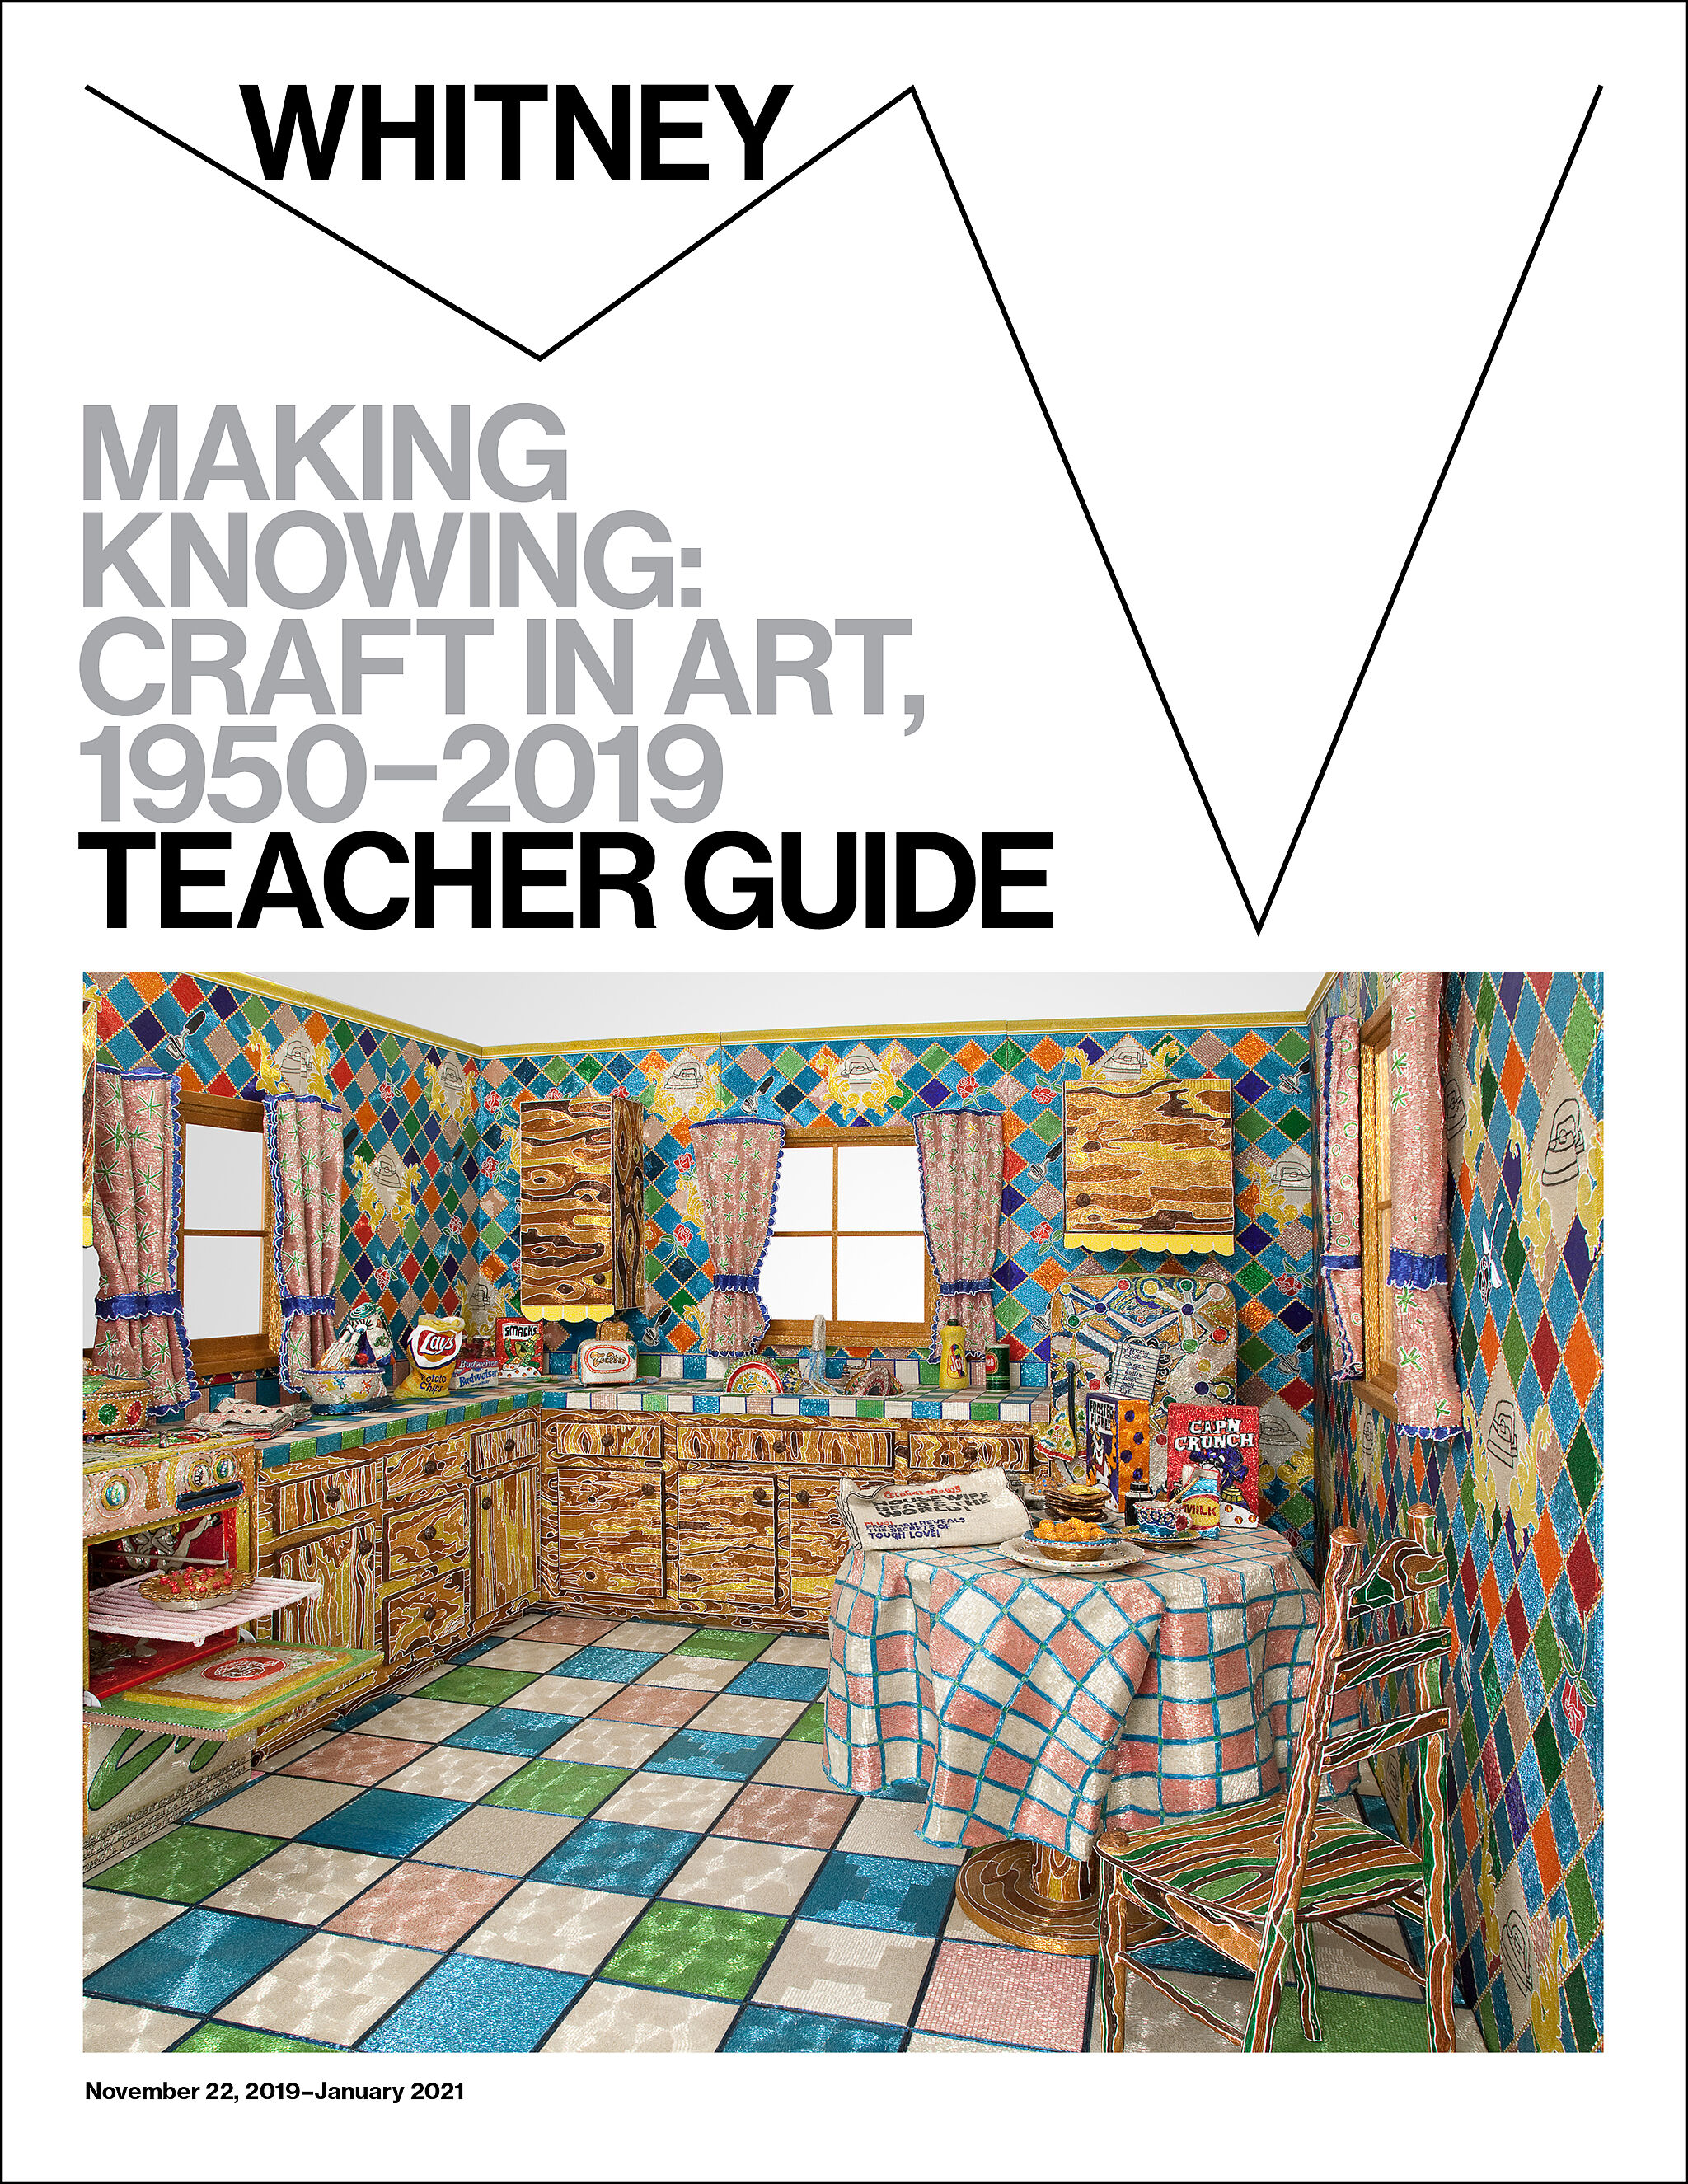 A teacher guide cover design featuring an artwork by Liza Lou.